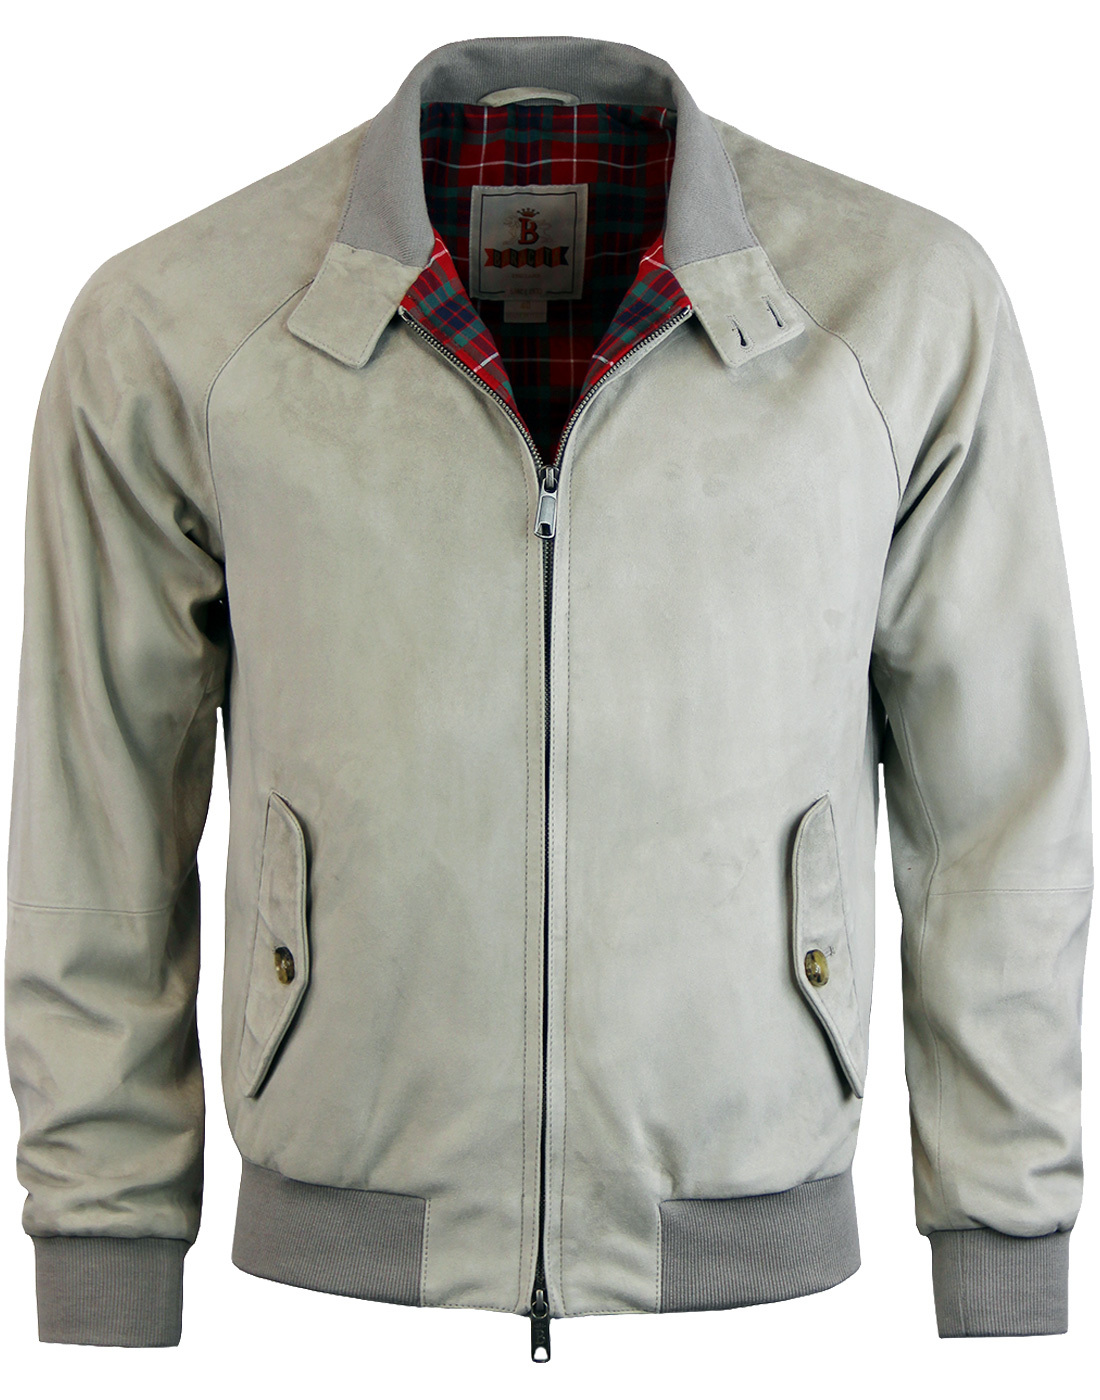 BARACUTA G9 Mod 60s Suede Harrington jacket in Mist